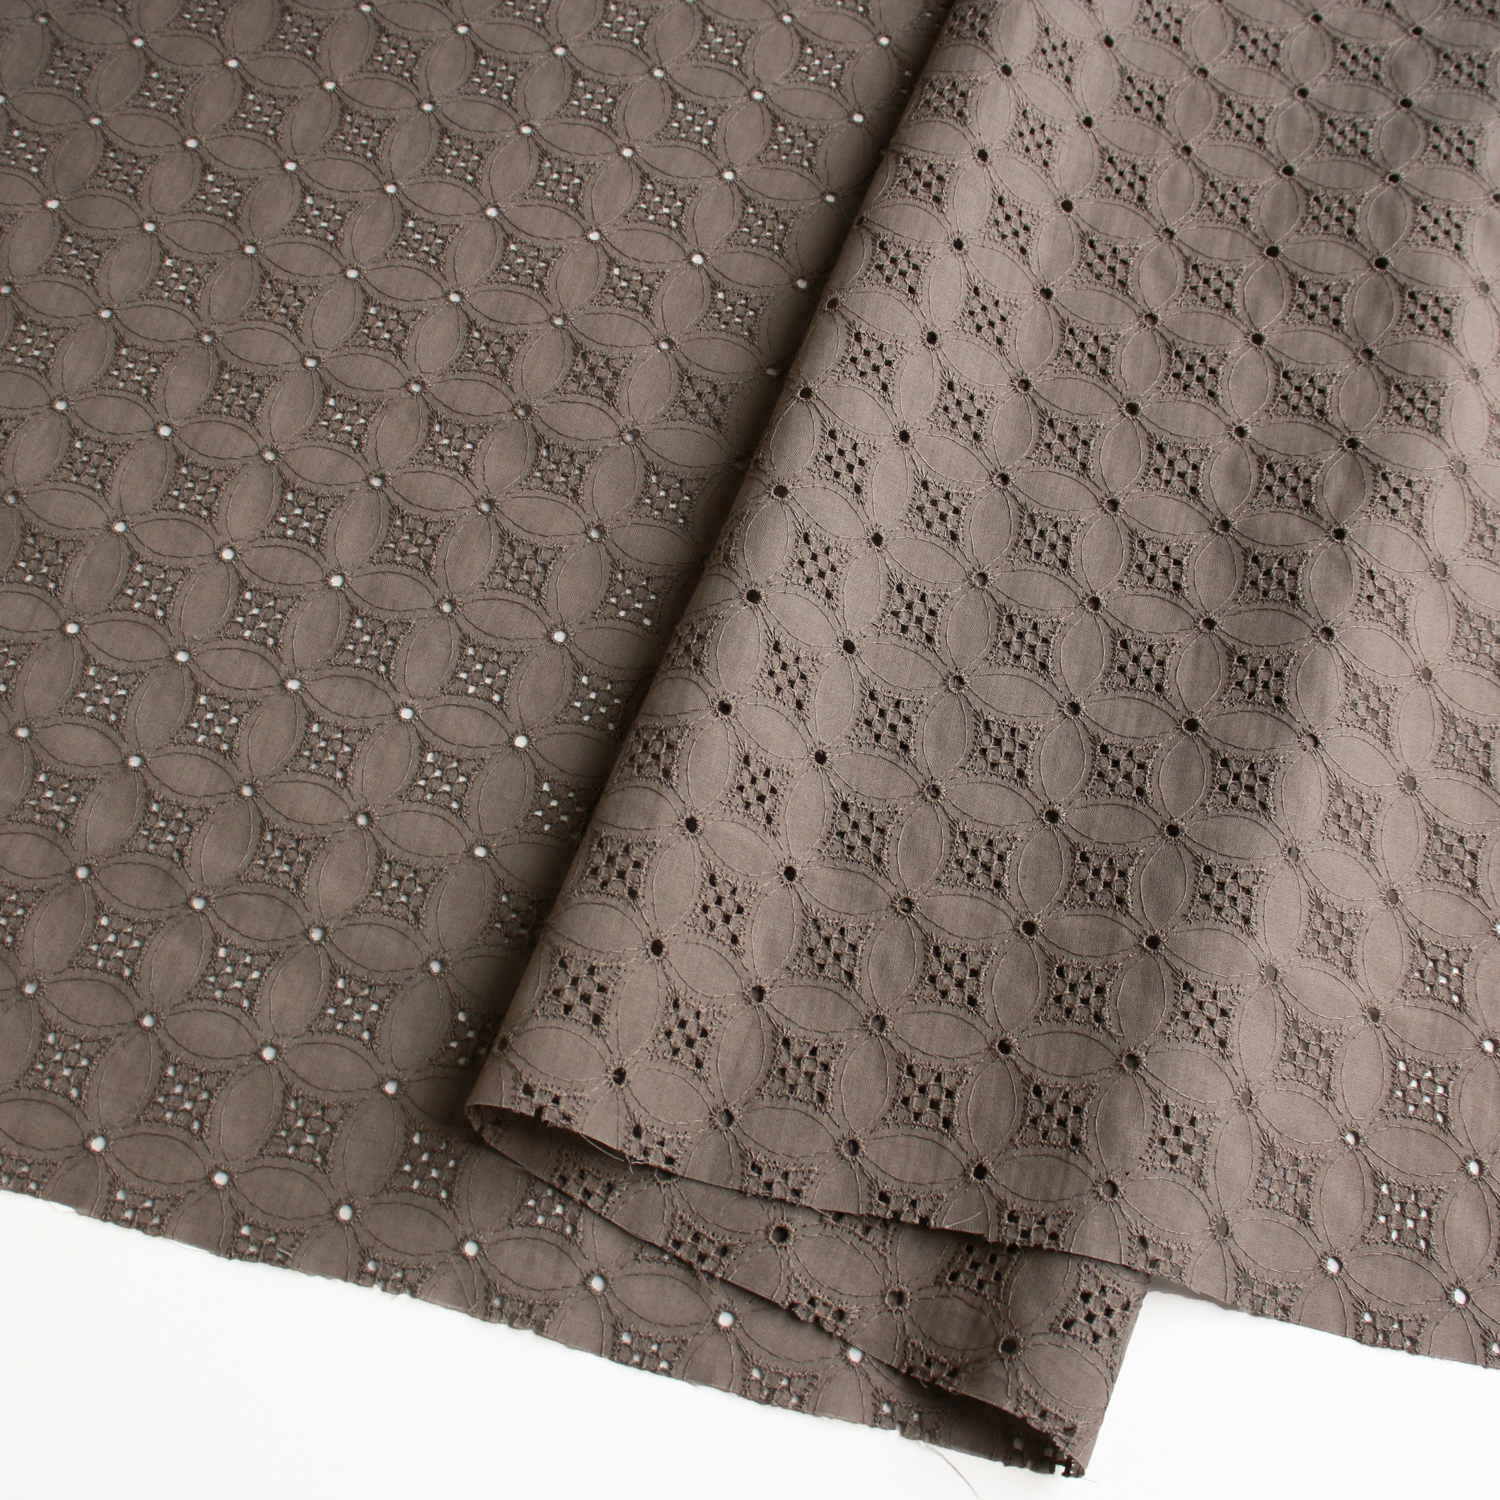 AL692R-94 cotton lace fabric, Width 100cm, 〇m roll (roll)